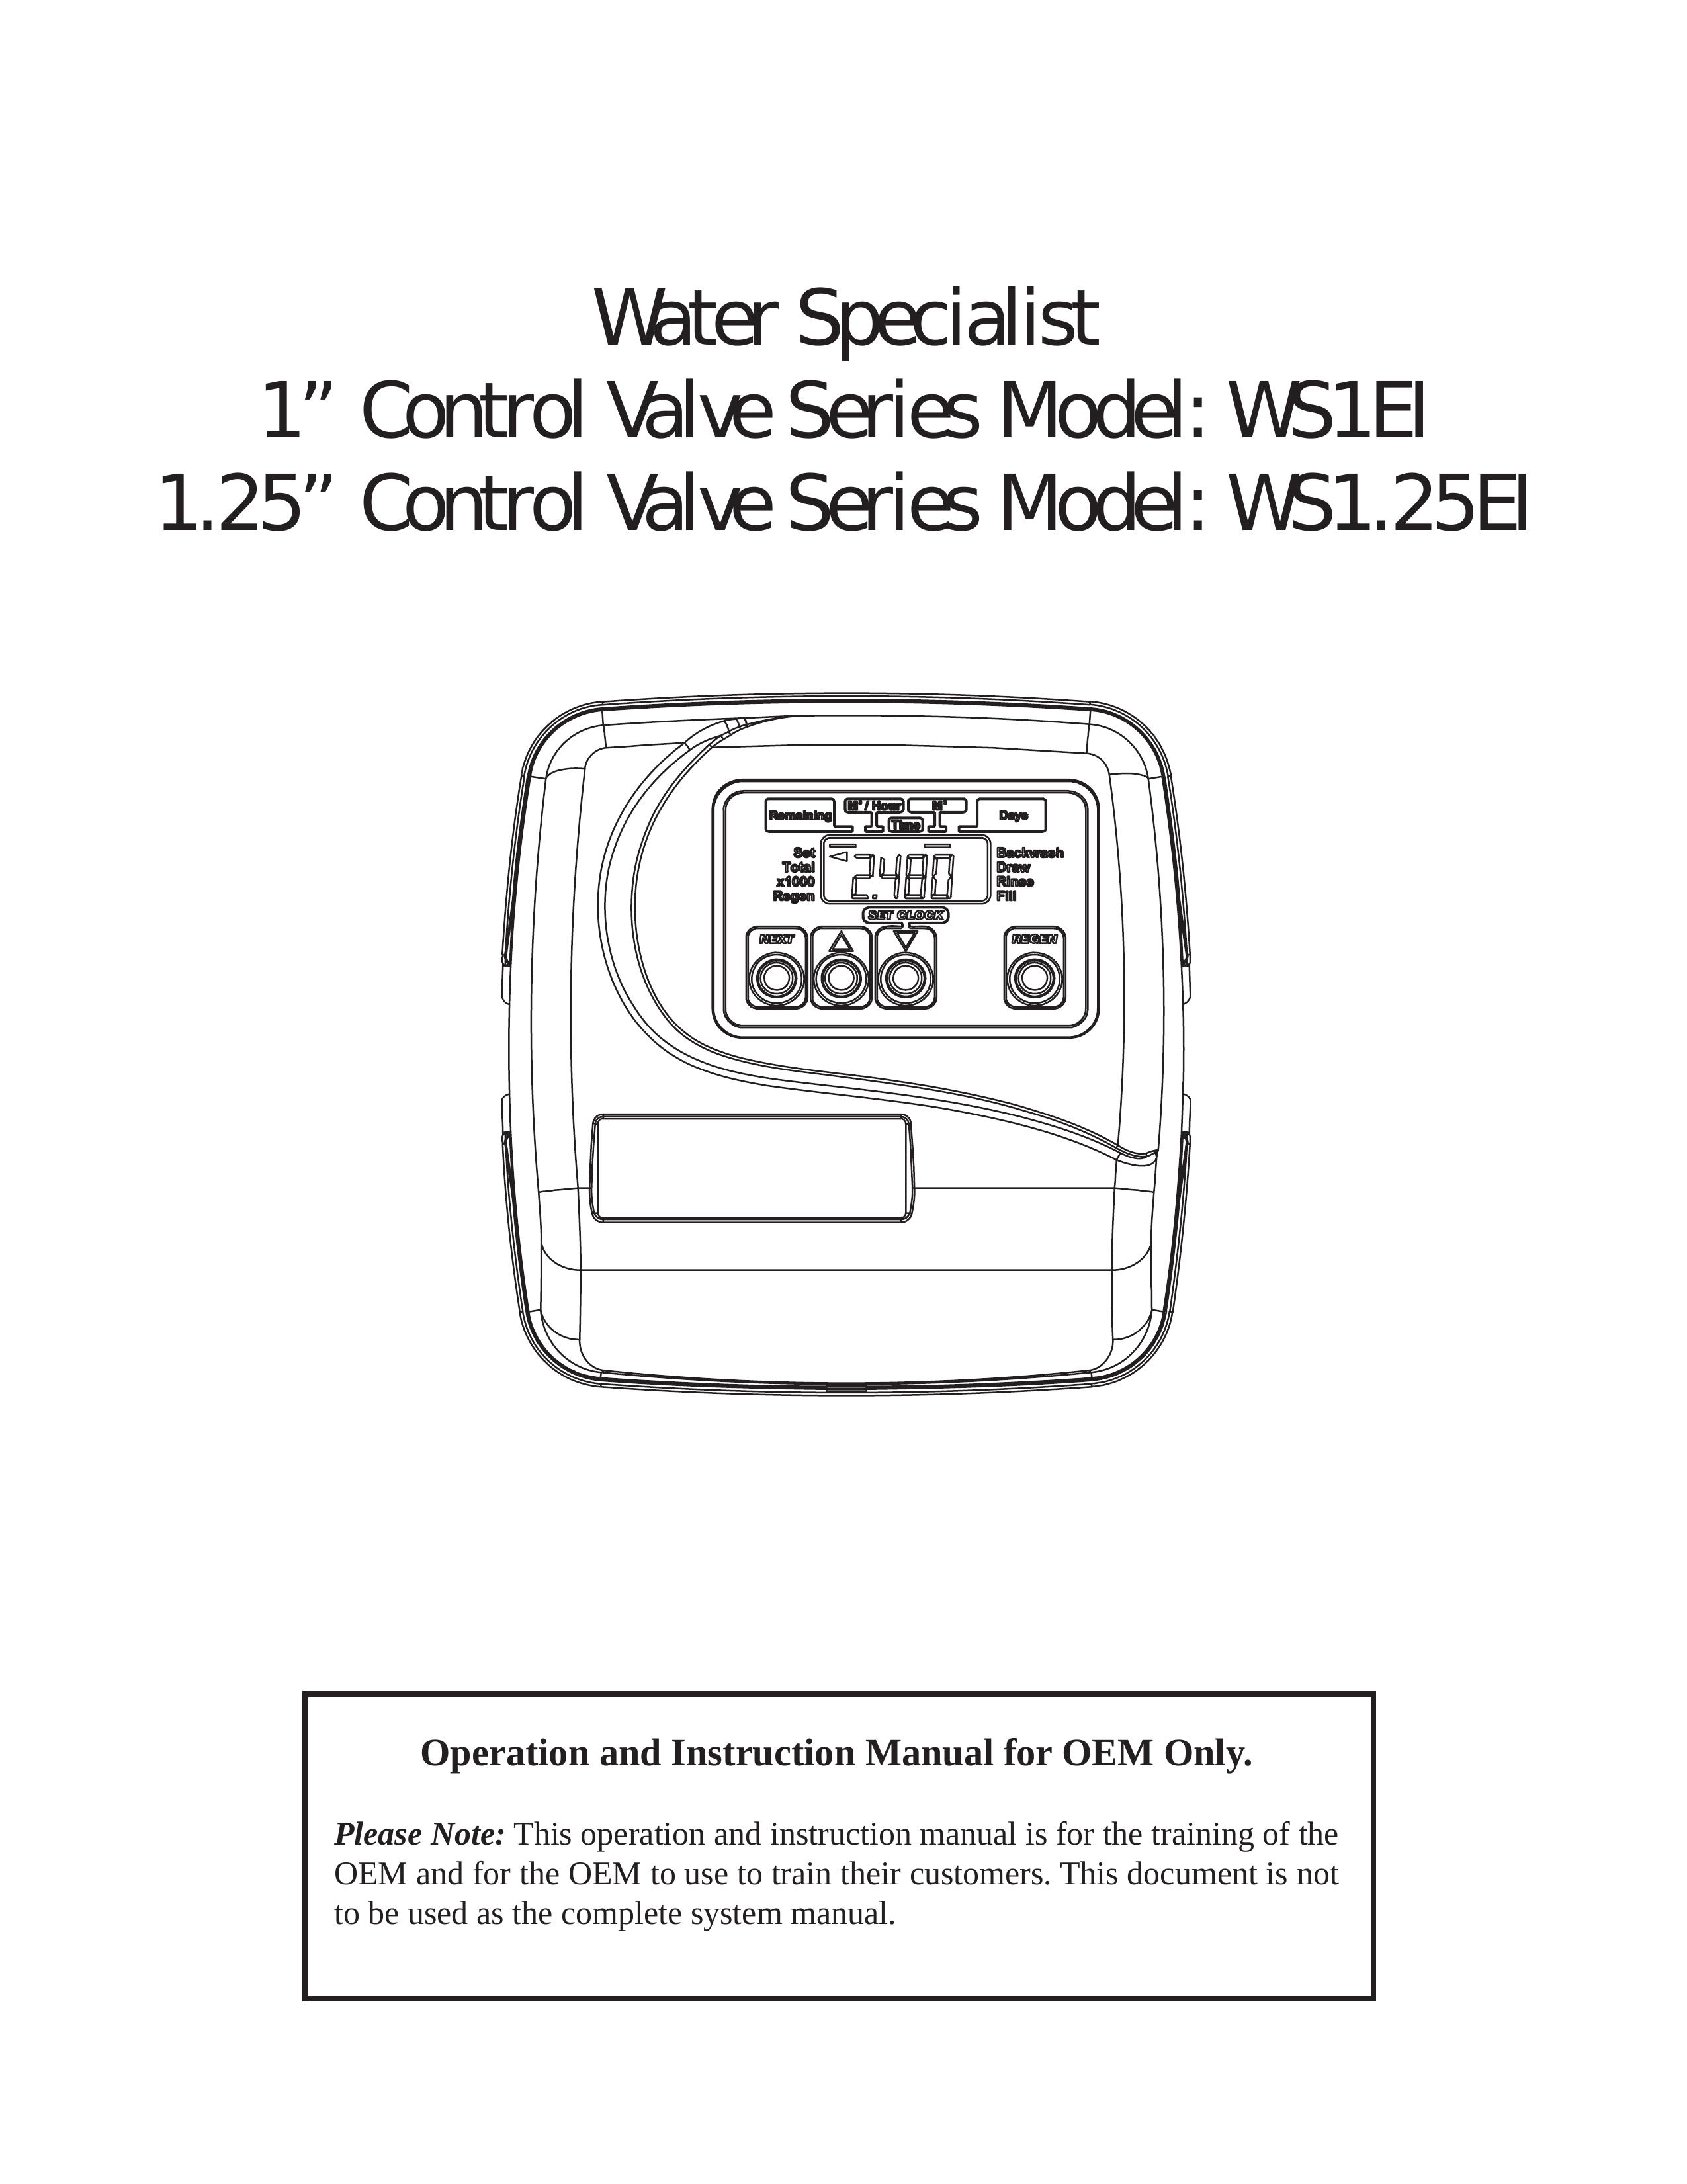 OEM Systems WS1.25EI Waterskis User Manual